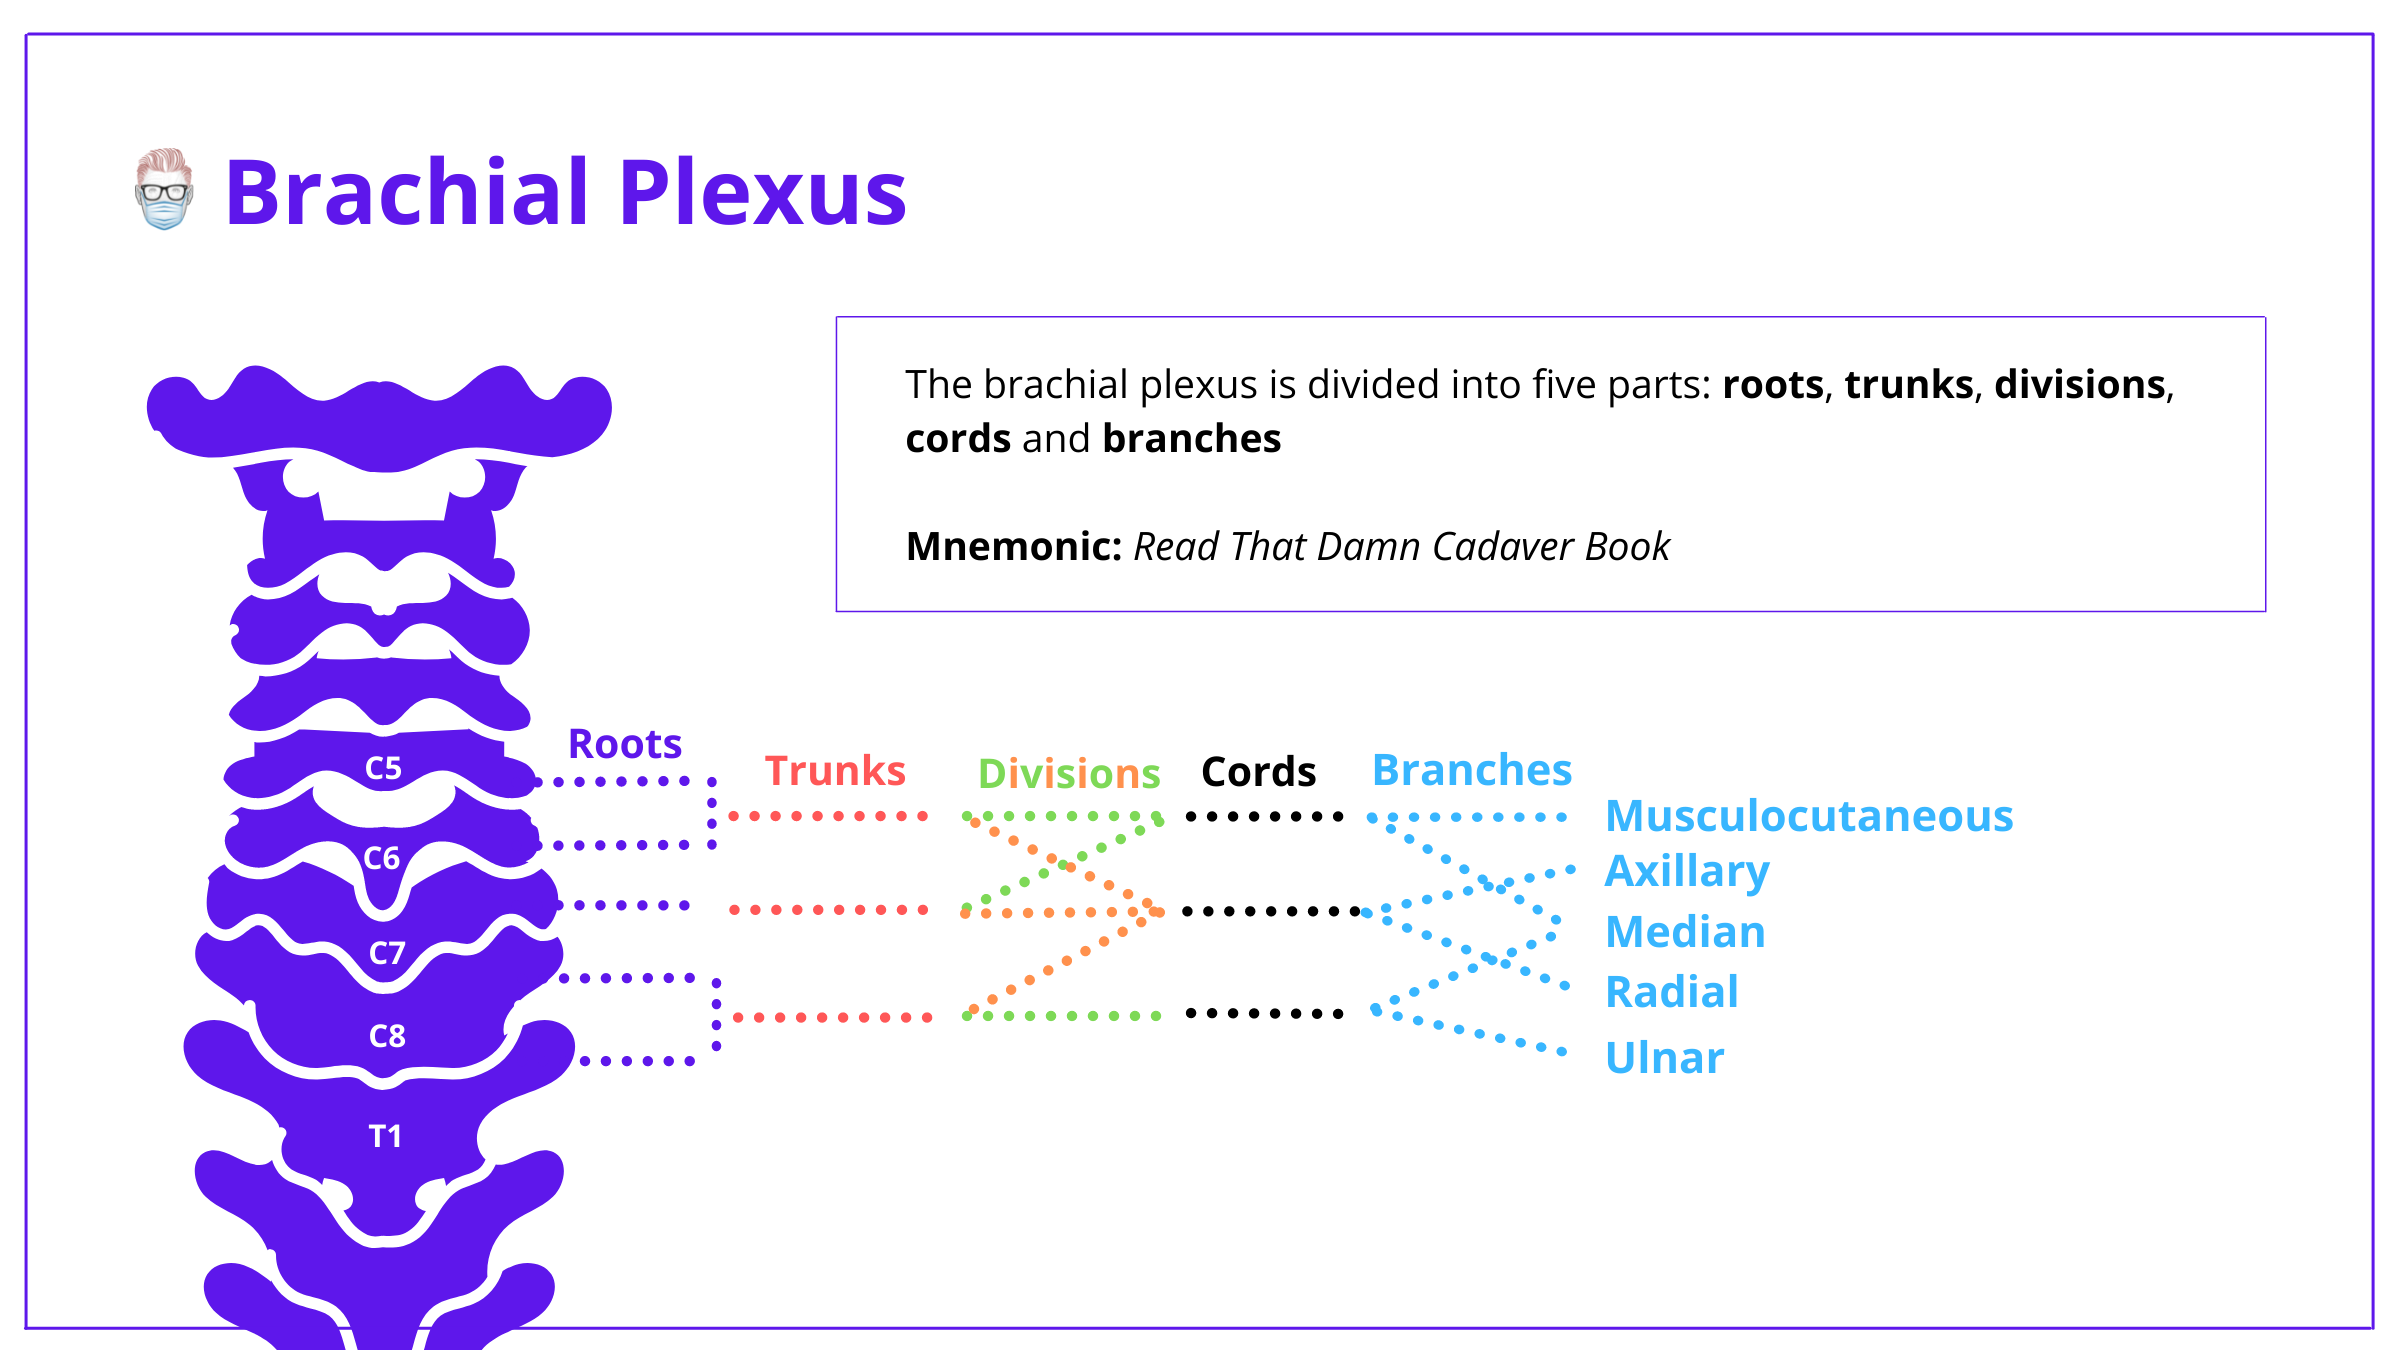 Brachial Plexus Anatomy: Roots, Trunks, Divisions, Cords & Branches